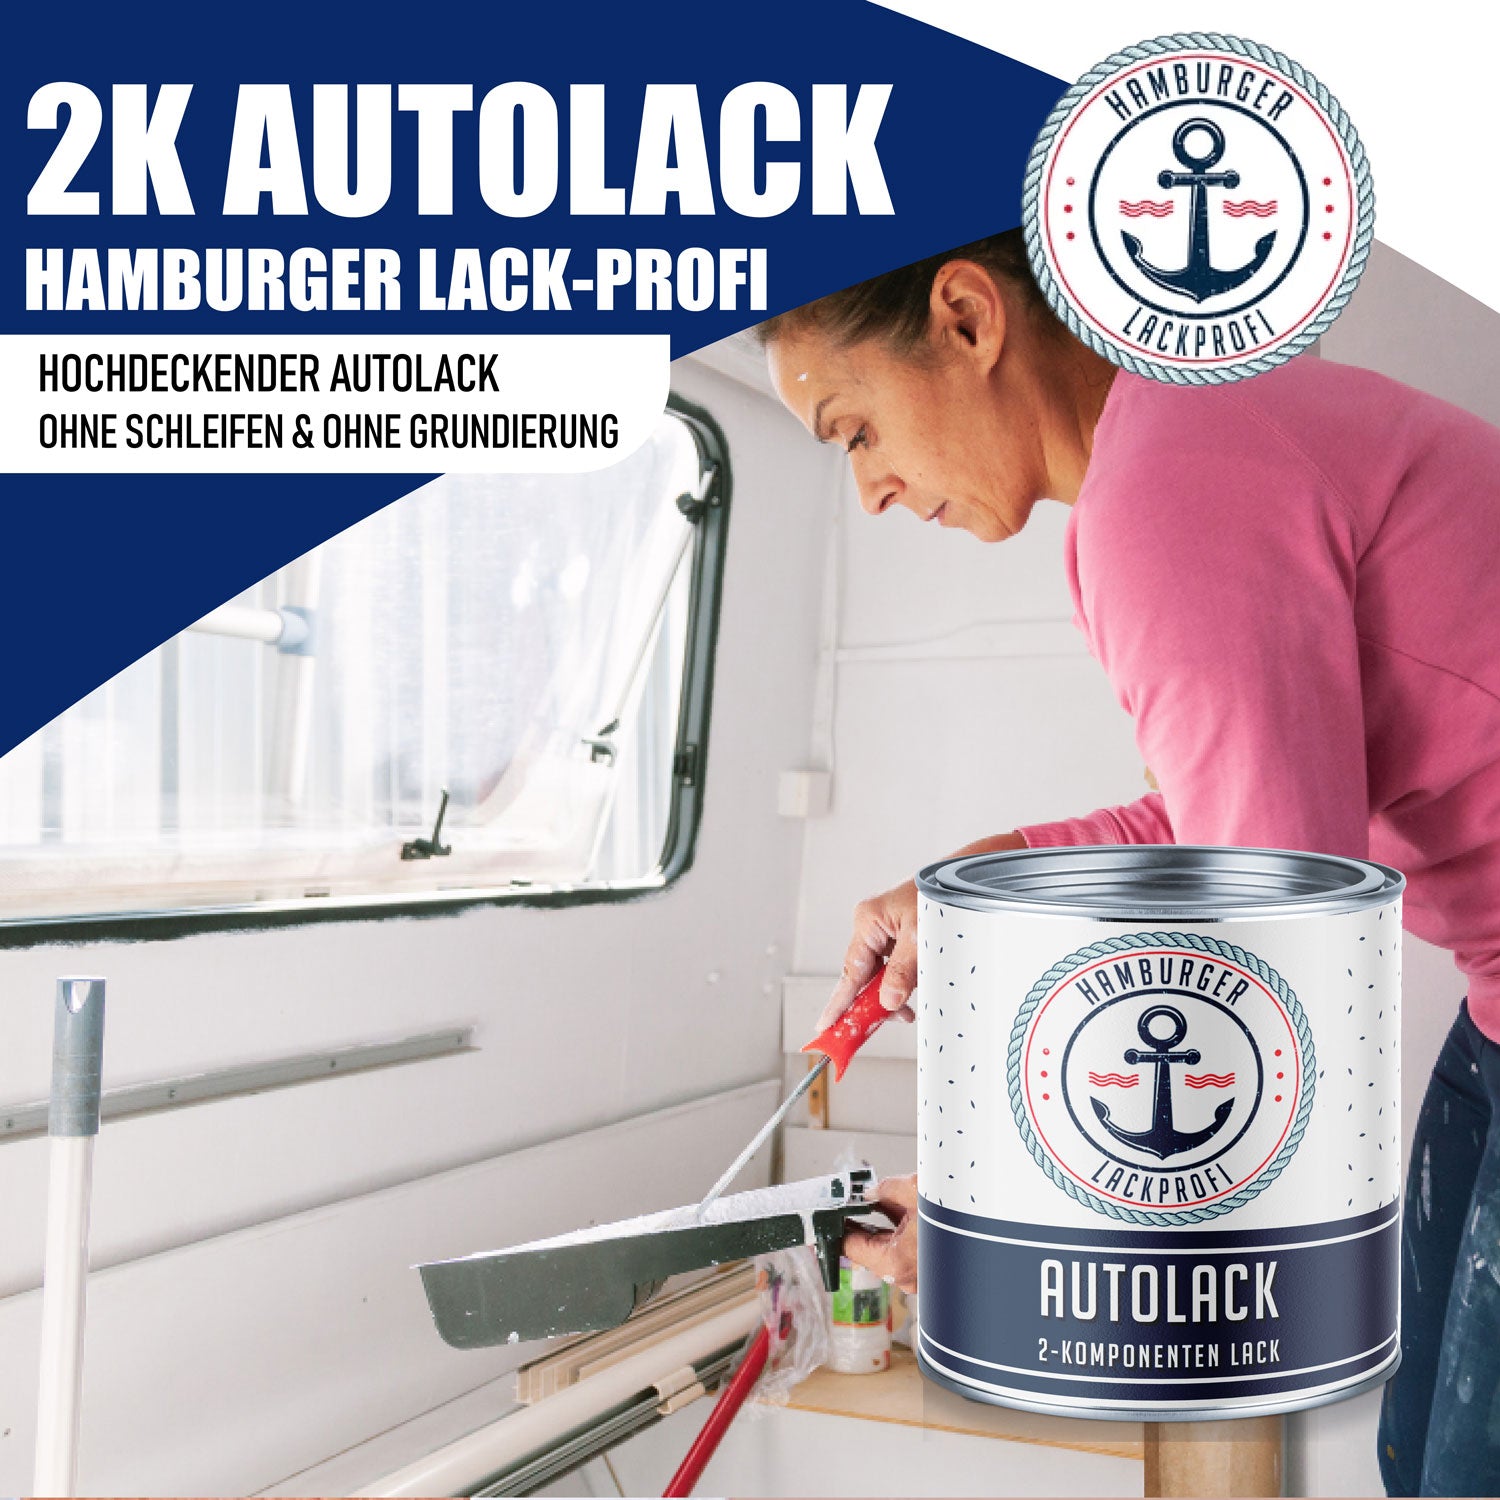 Hamburger Lack-Profi 2K Autolack Fernblau RAL 5023 - hochdeckend & rostschützend